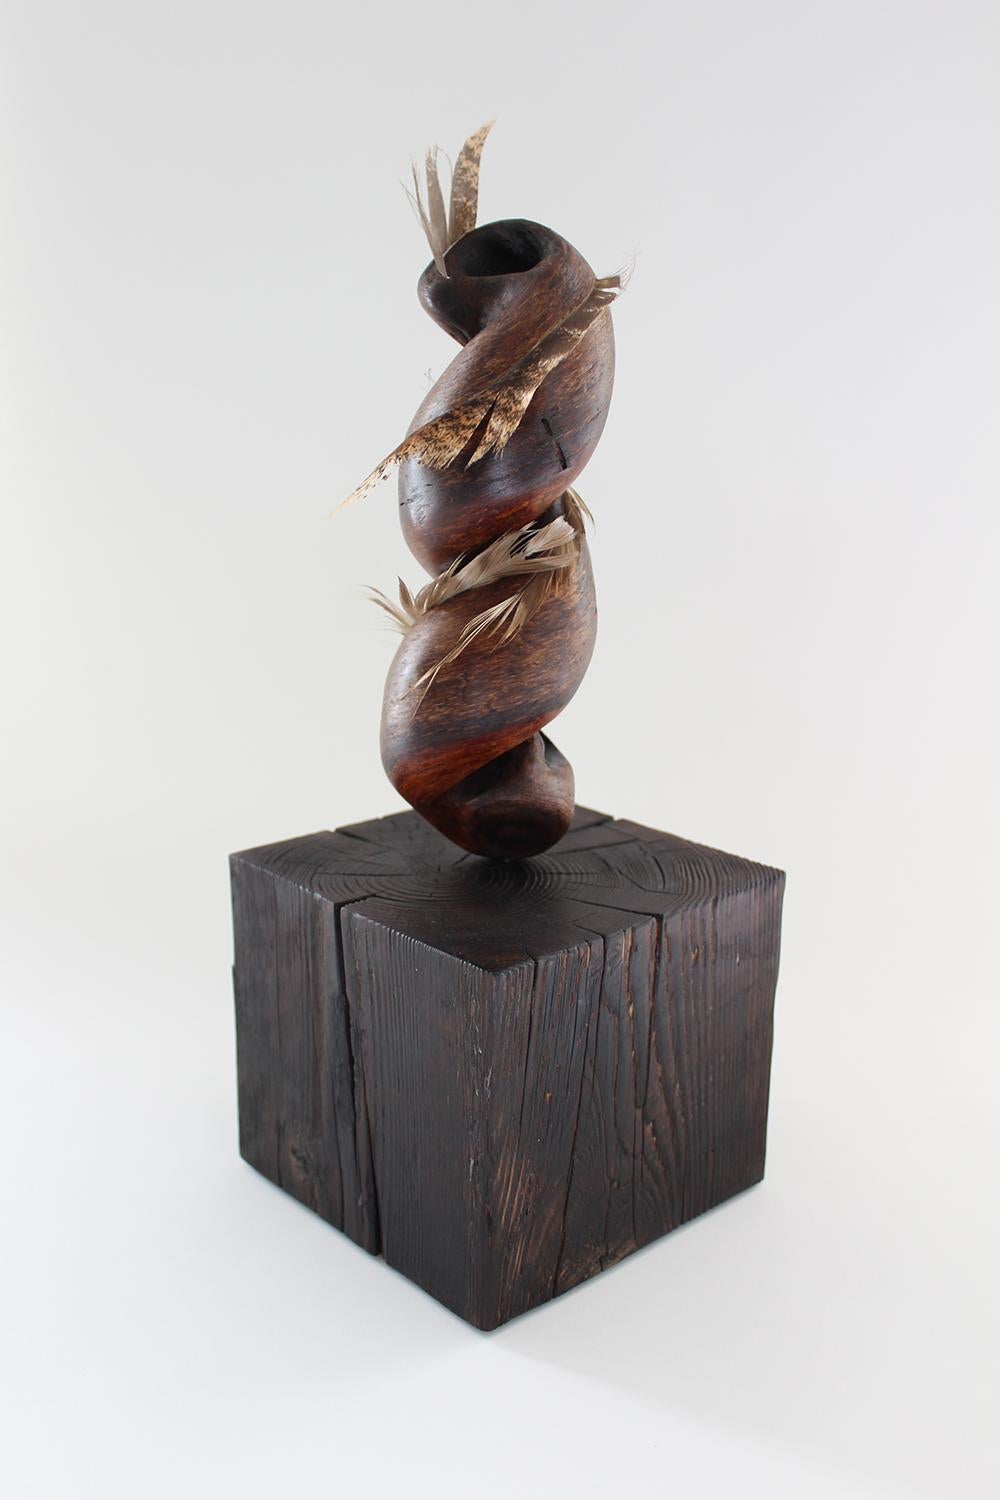 Abstract Sculpture Miller Opie - « Silent Whirlabout », bois, chêne blanc, plumes, bruns, ivoires, sculpture